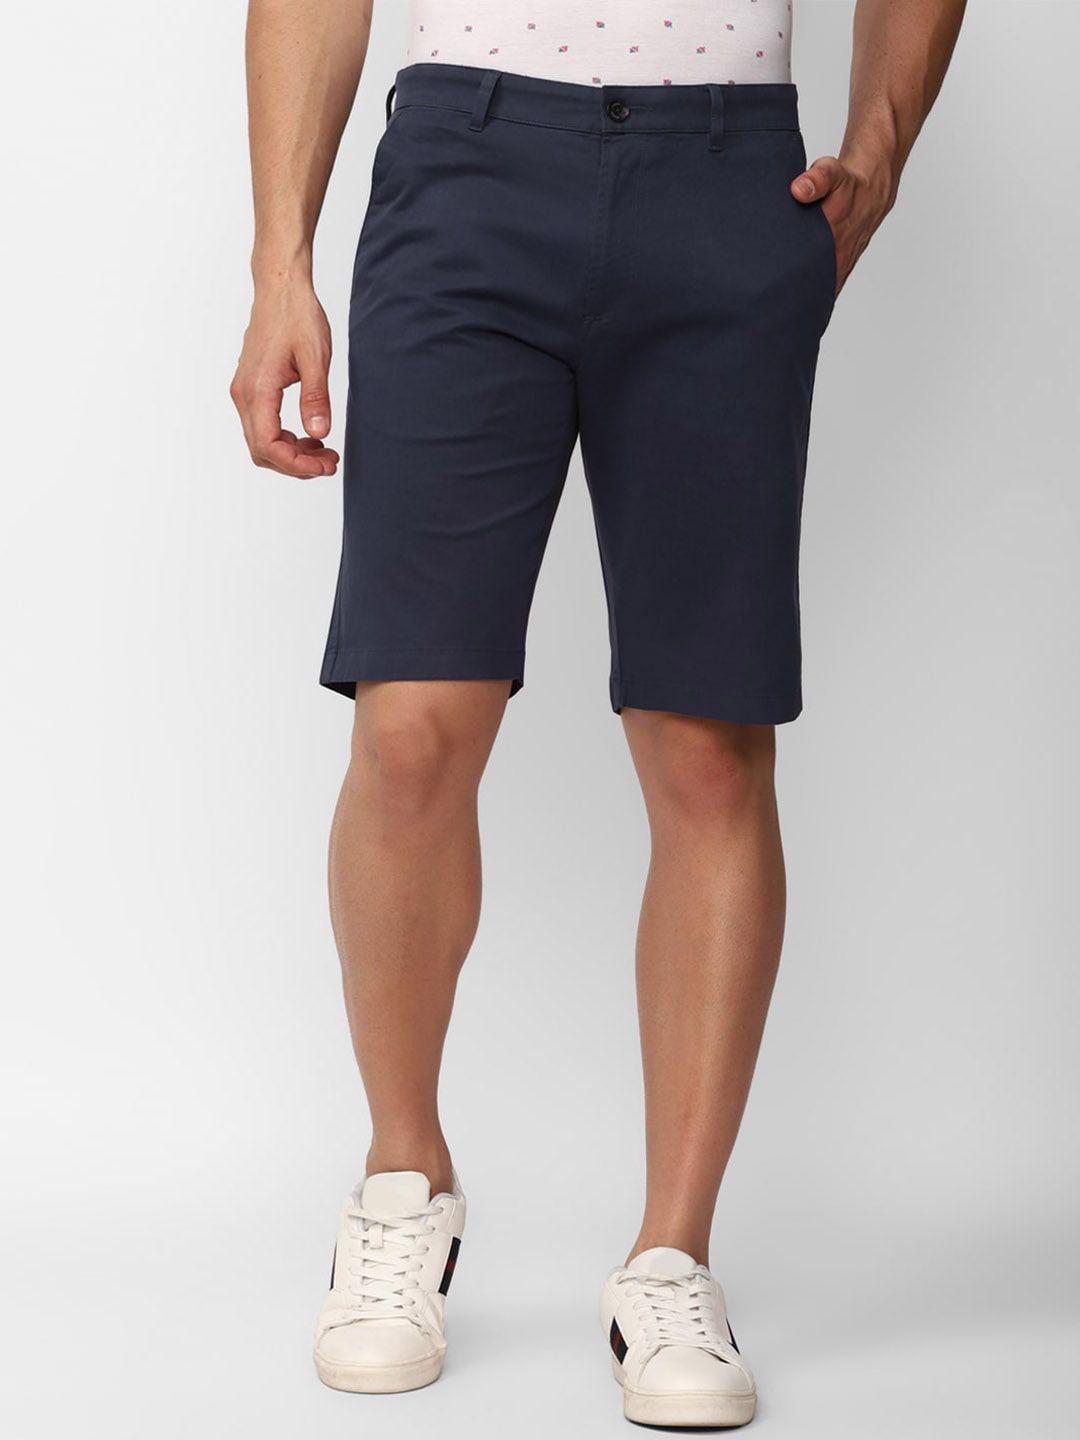 simon-carter-london-men-mid-rise-pure-cotton-shorts